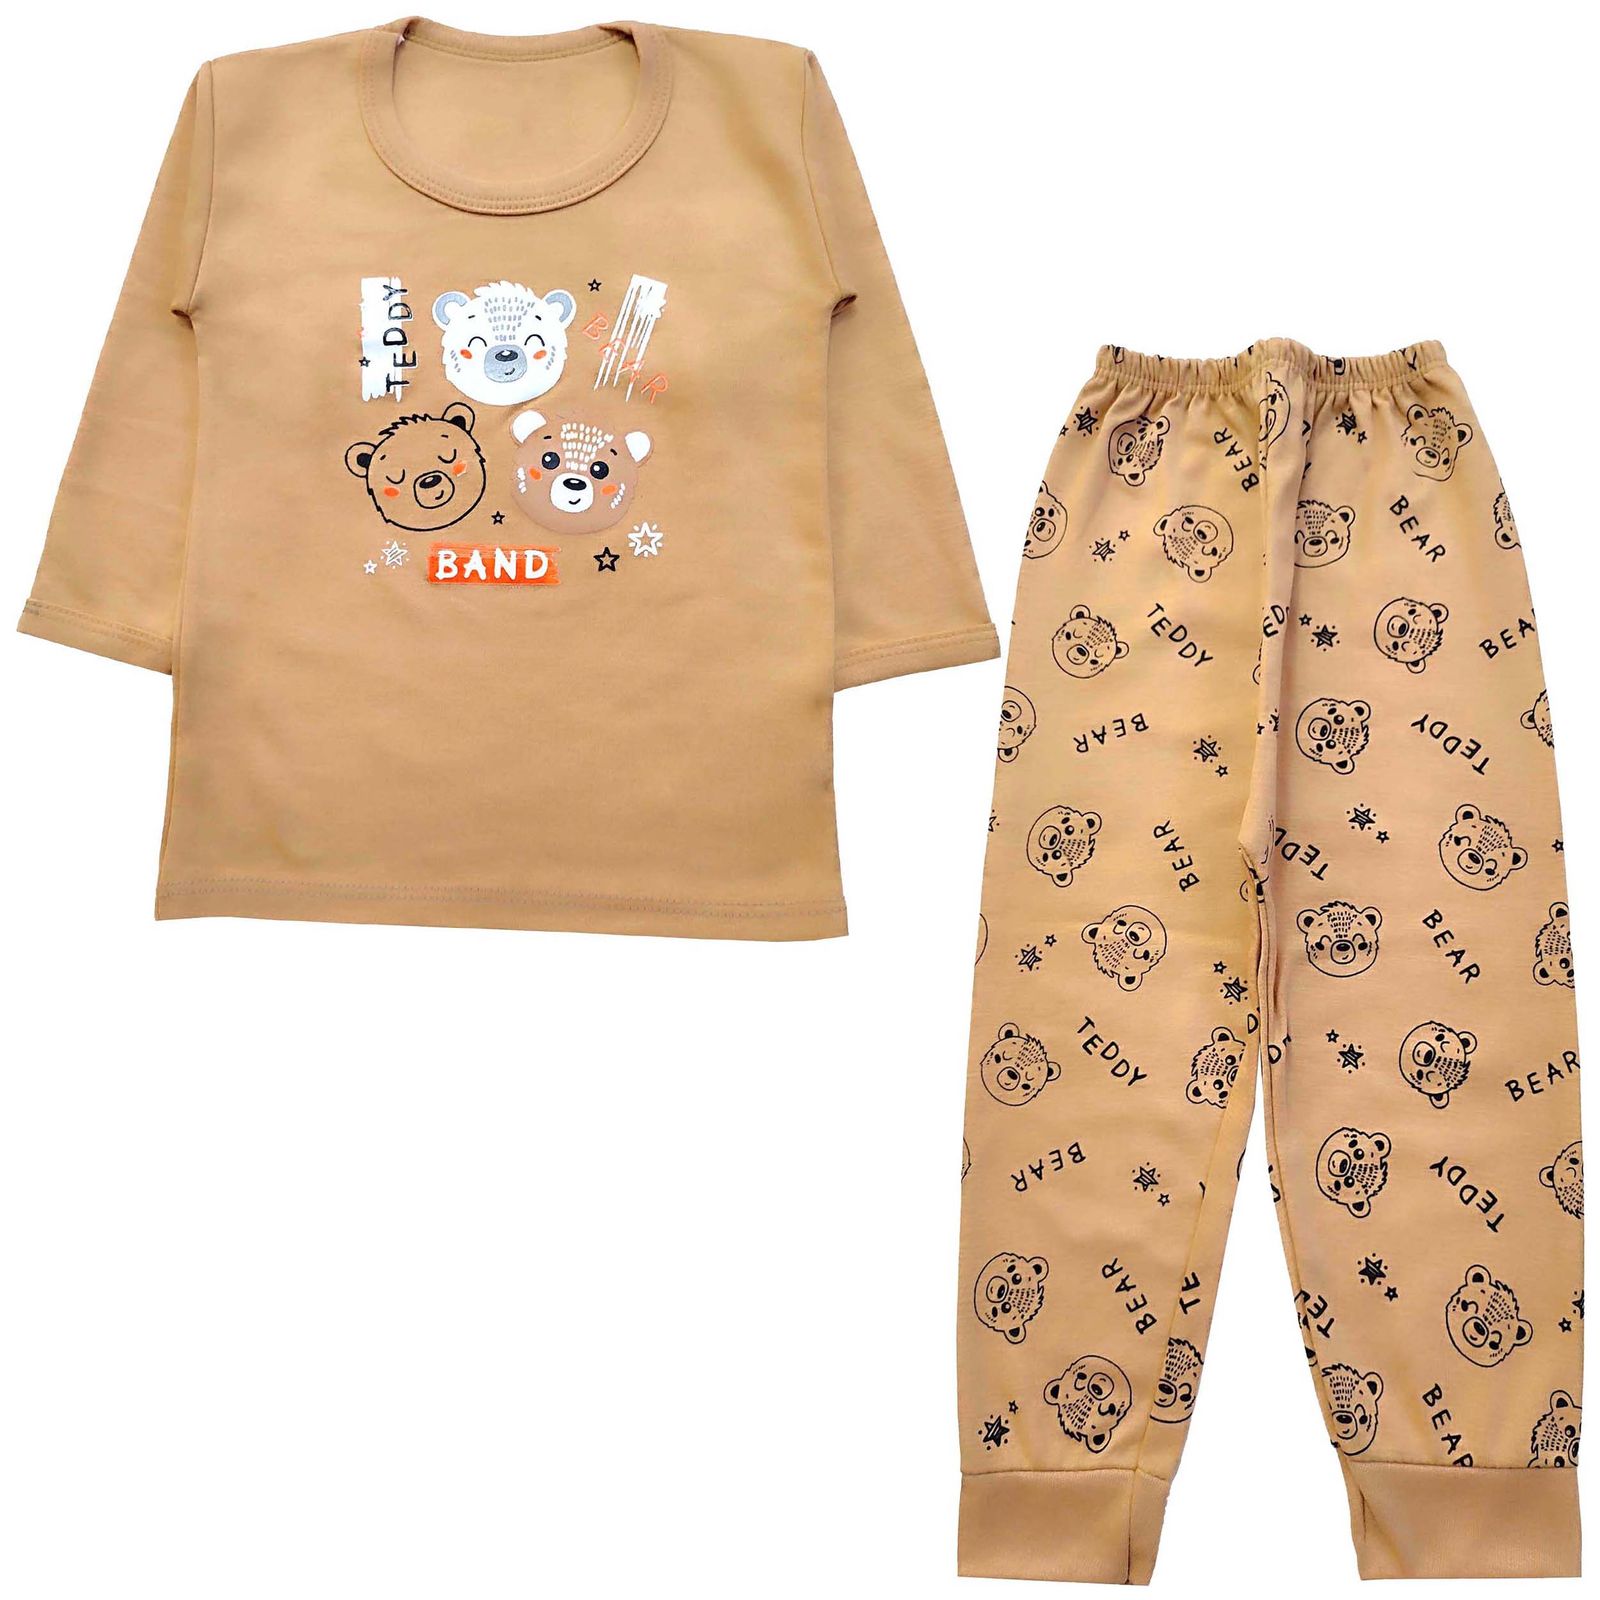 ست تی شرت و شلوار نوزادی مدل کله خرس کد 3927 رنگ نسکافه ای -  - 1